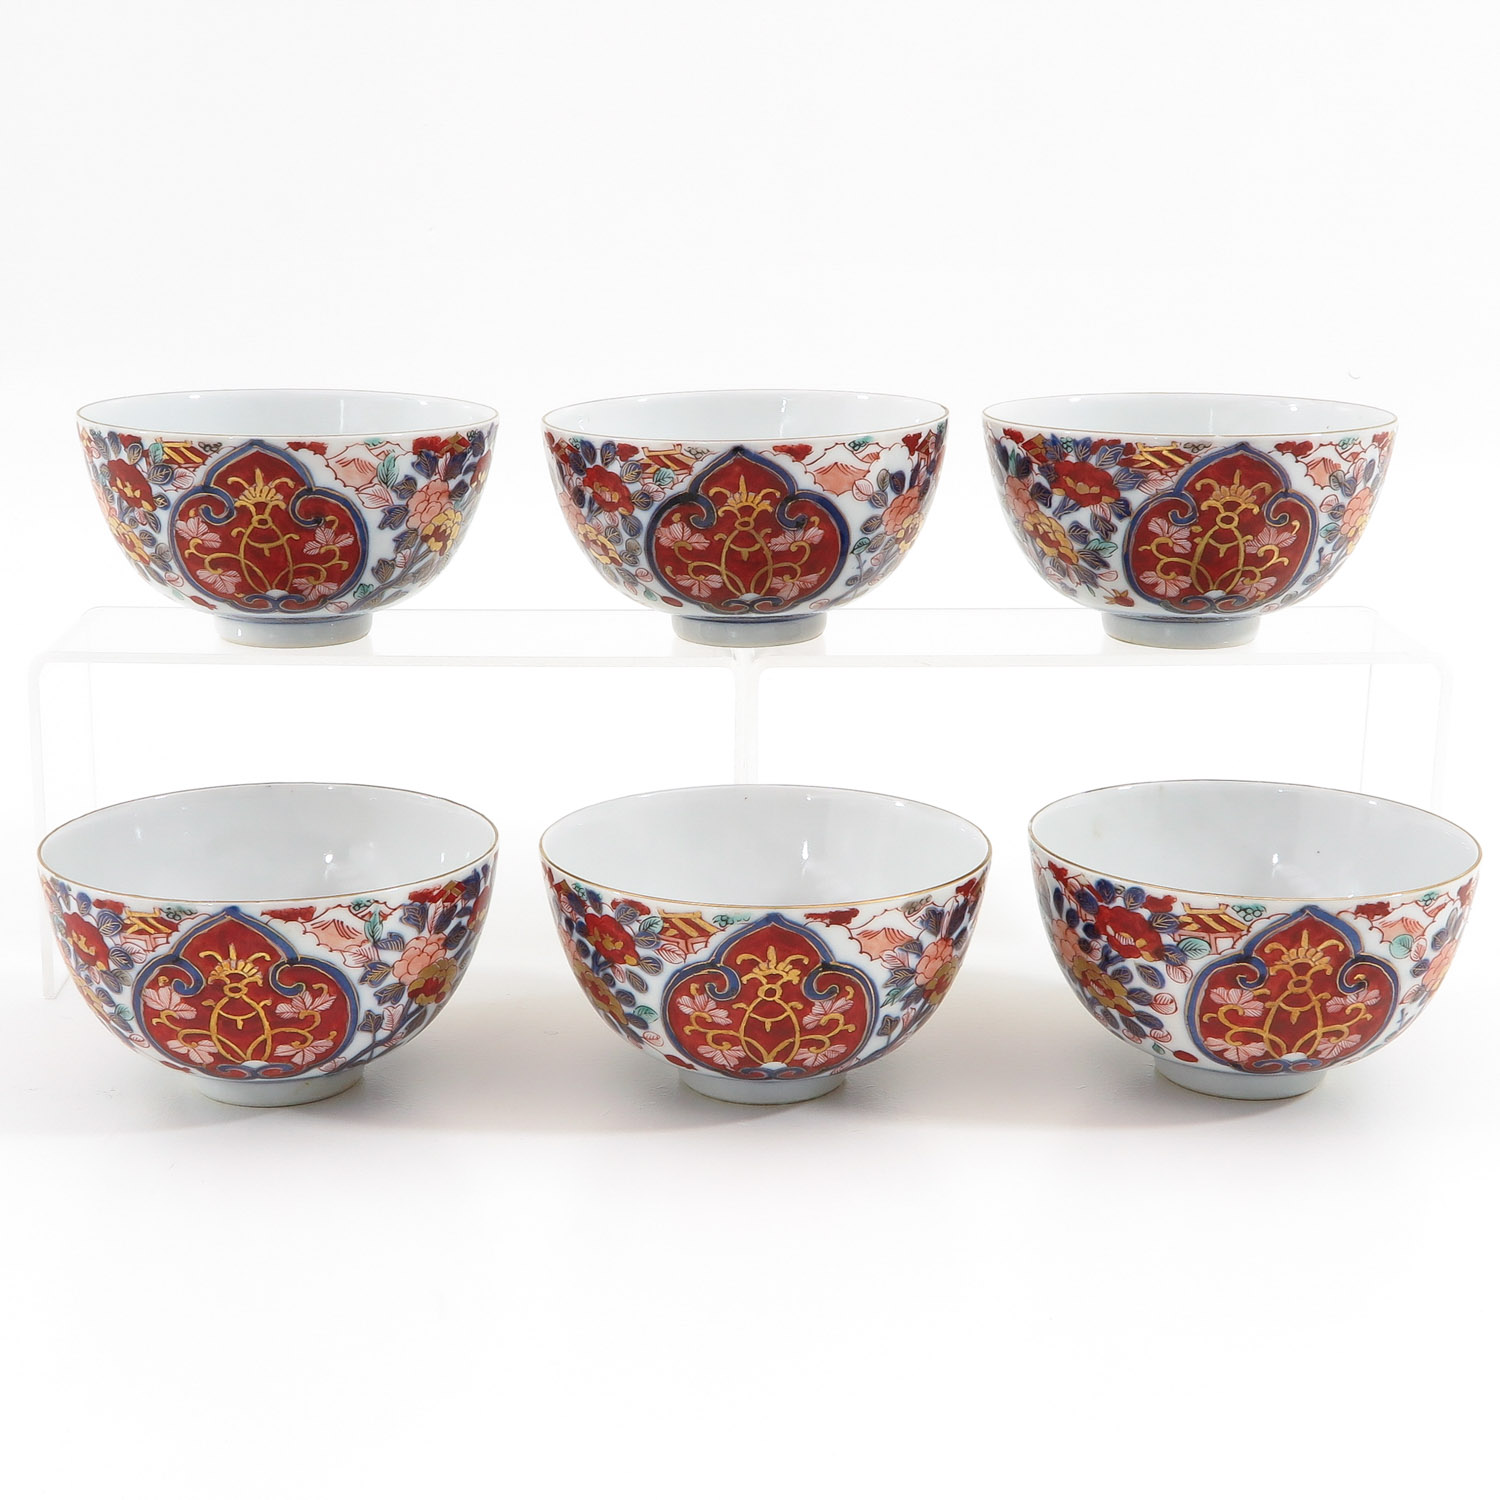 A Series of 6 Imari Bowls